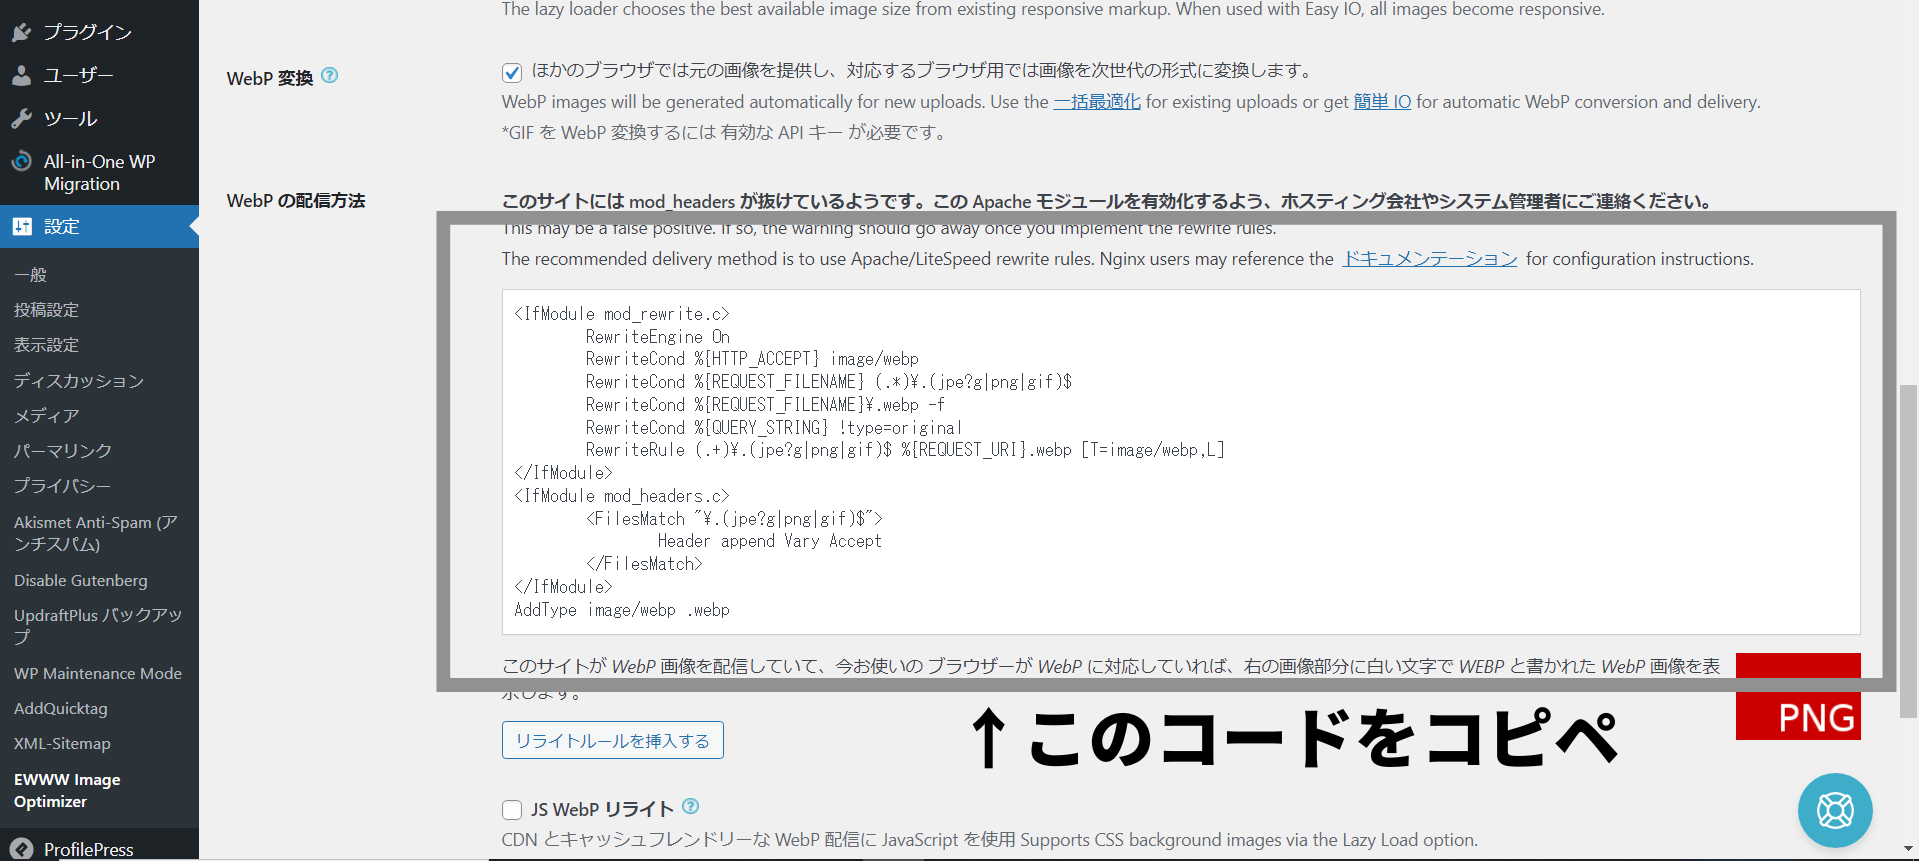 WebP htaccessコードコピペが画像